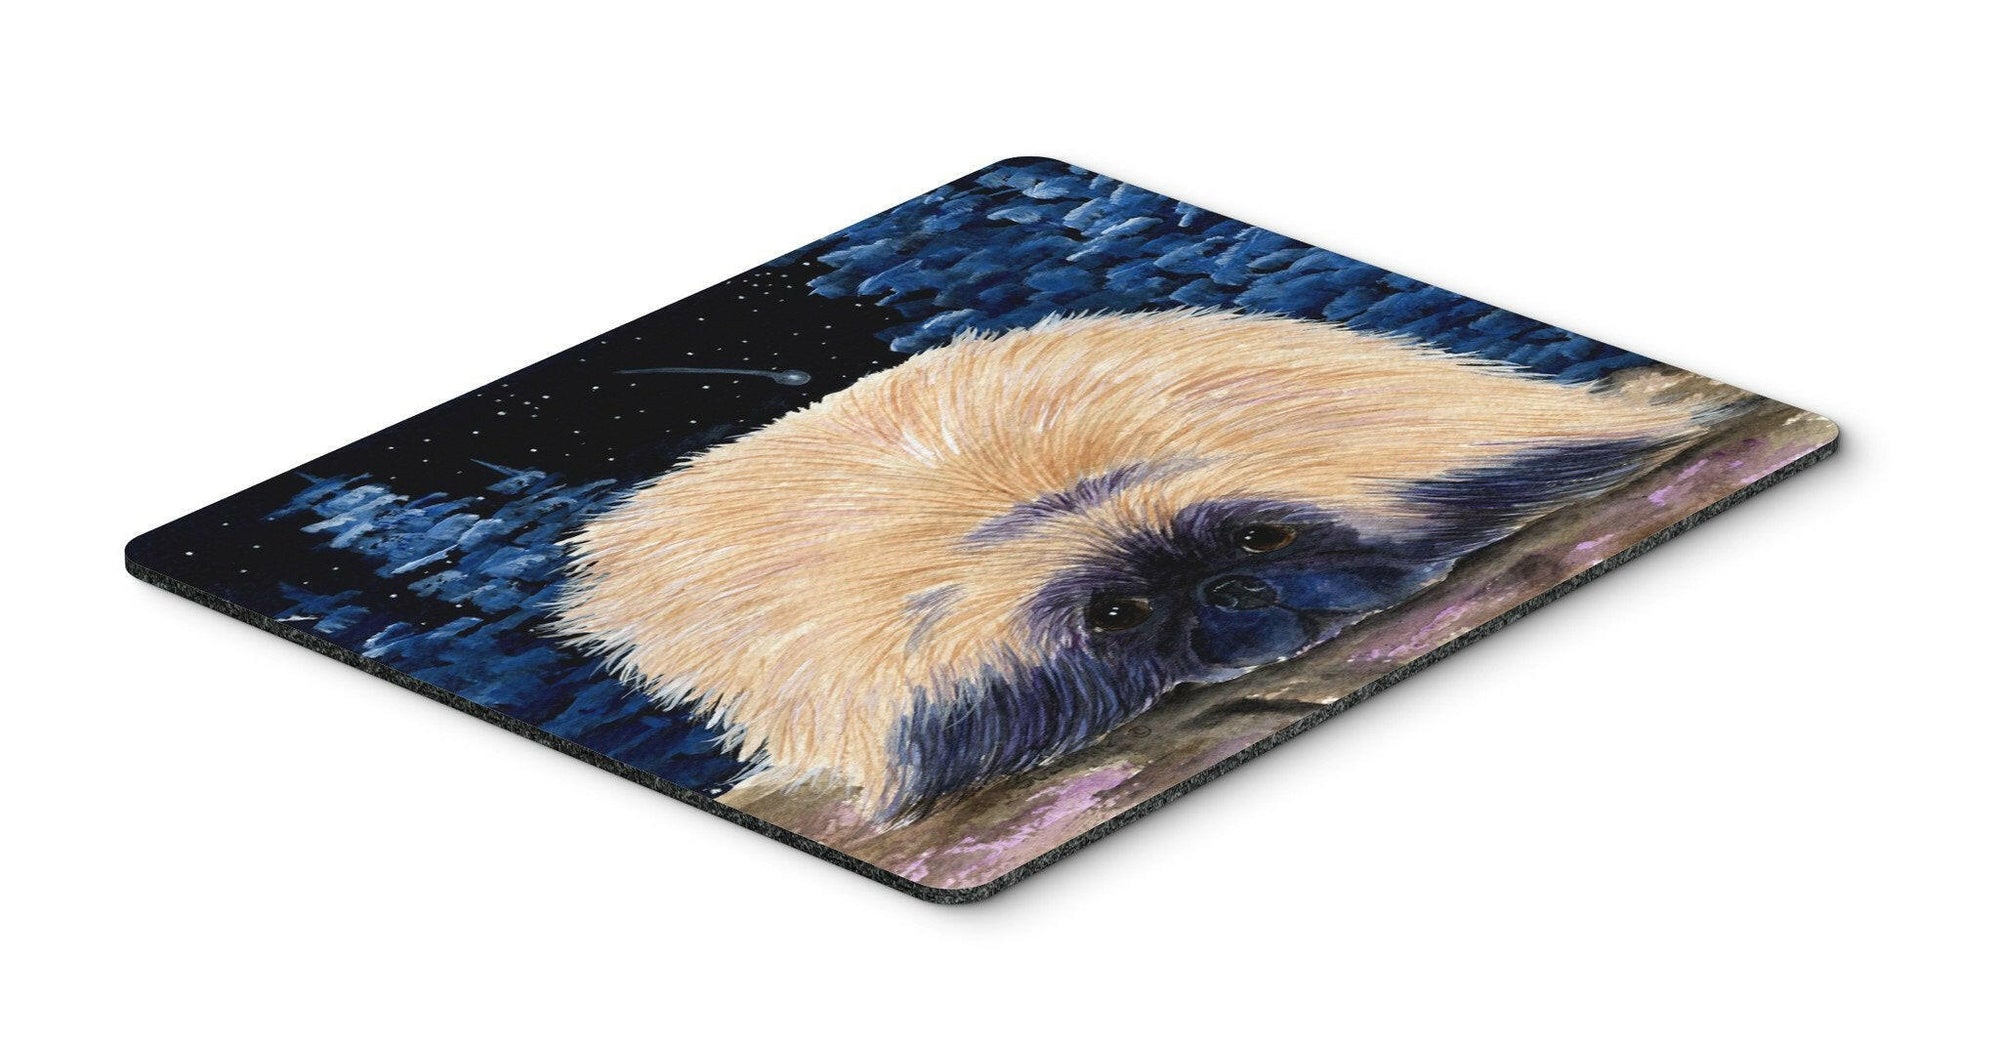 Starry Night Pekingese Mouse Pad / Hot Pad / Trivet by Caroline's Treasures